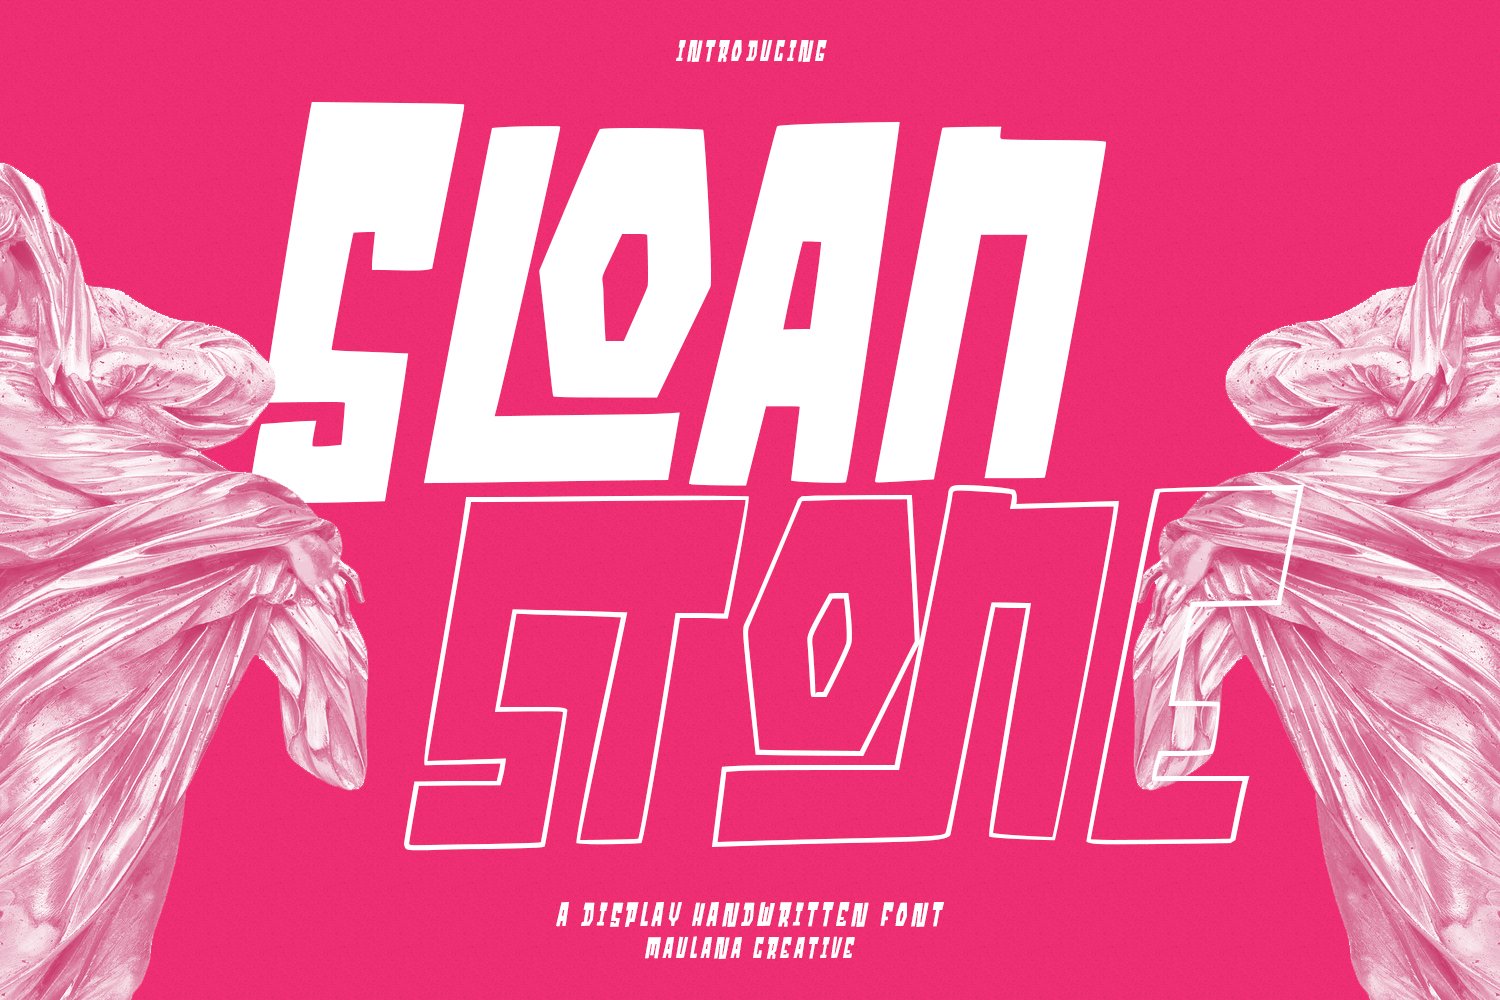 Sloanstone Decorative Display Font cover image.